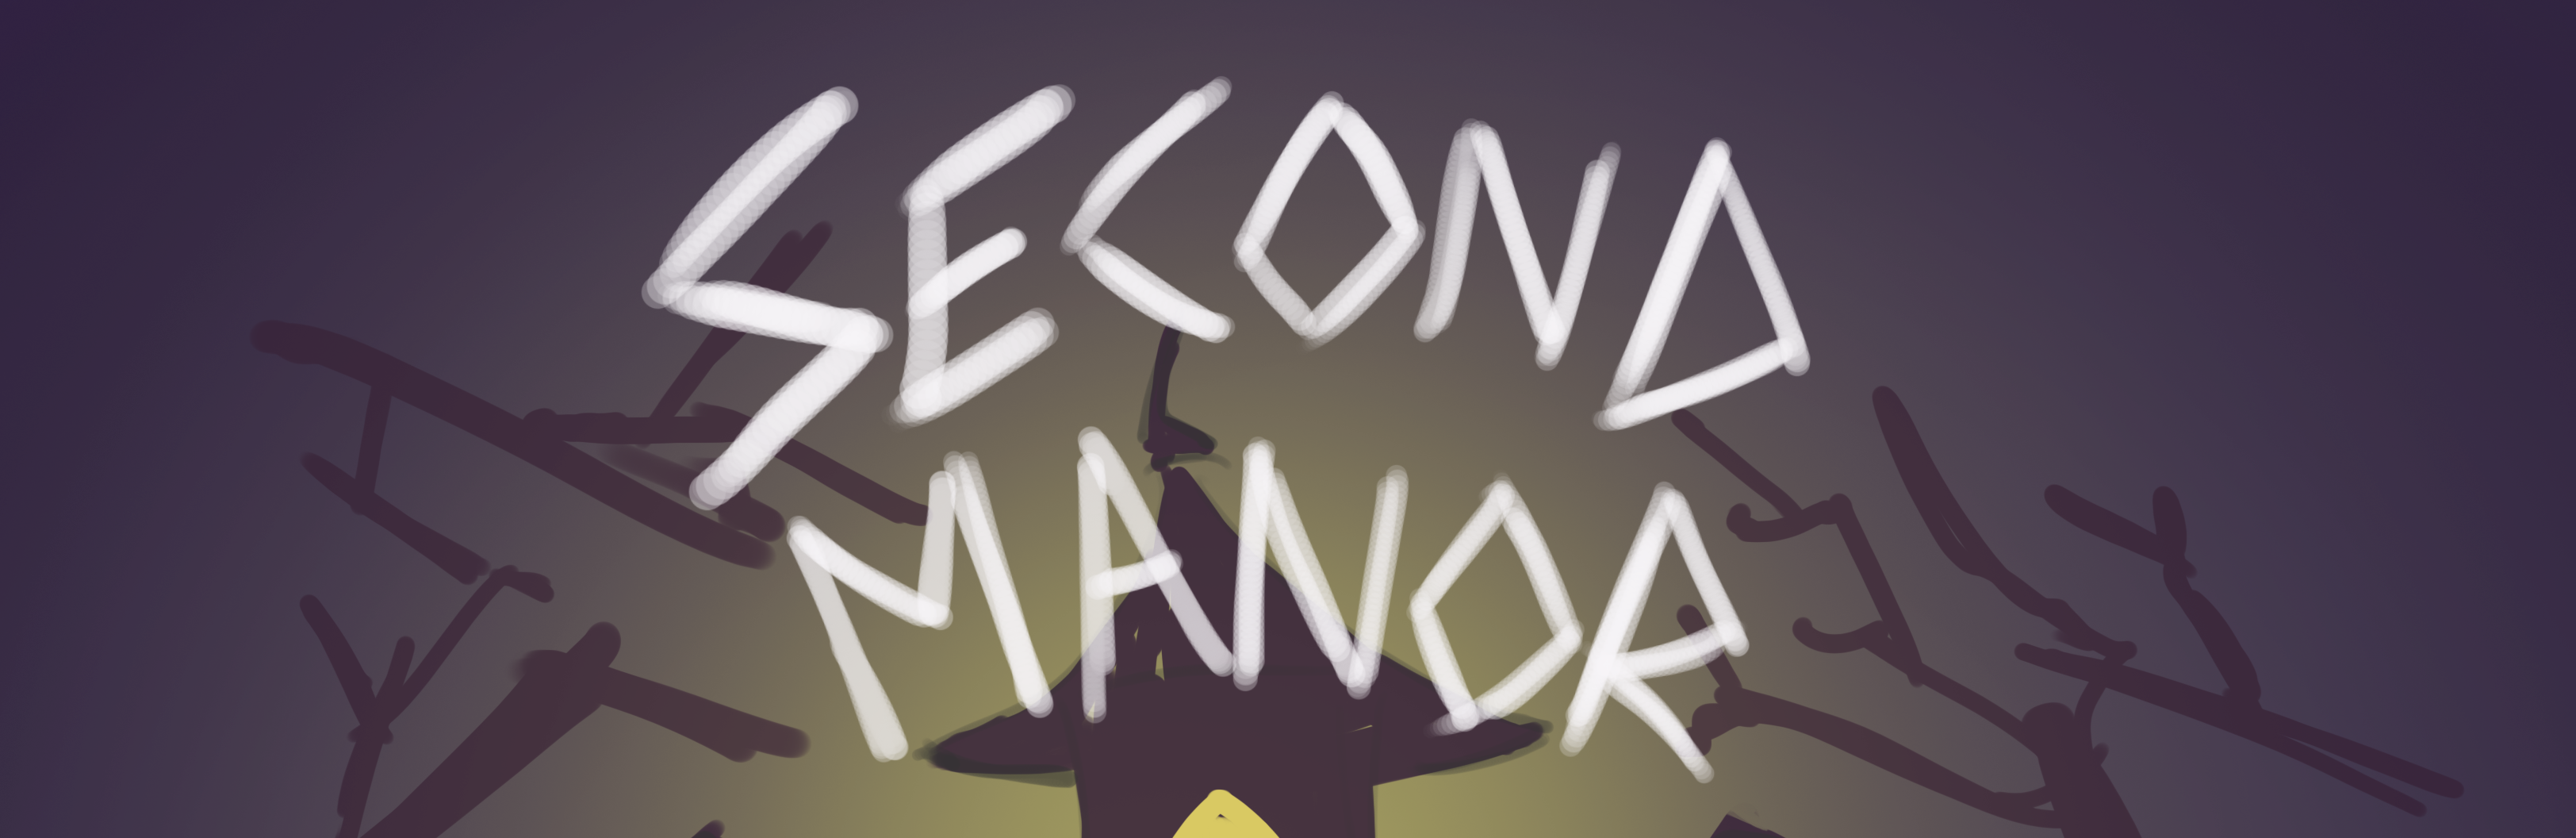 Second Manor